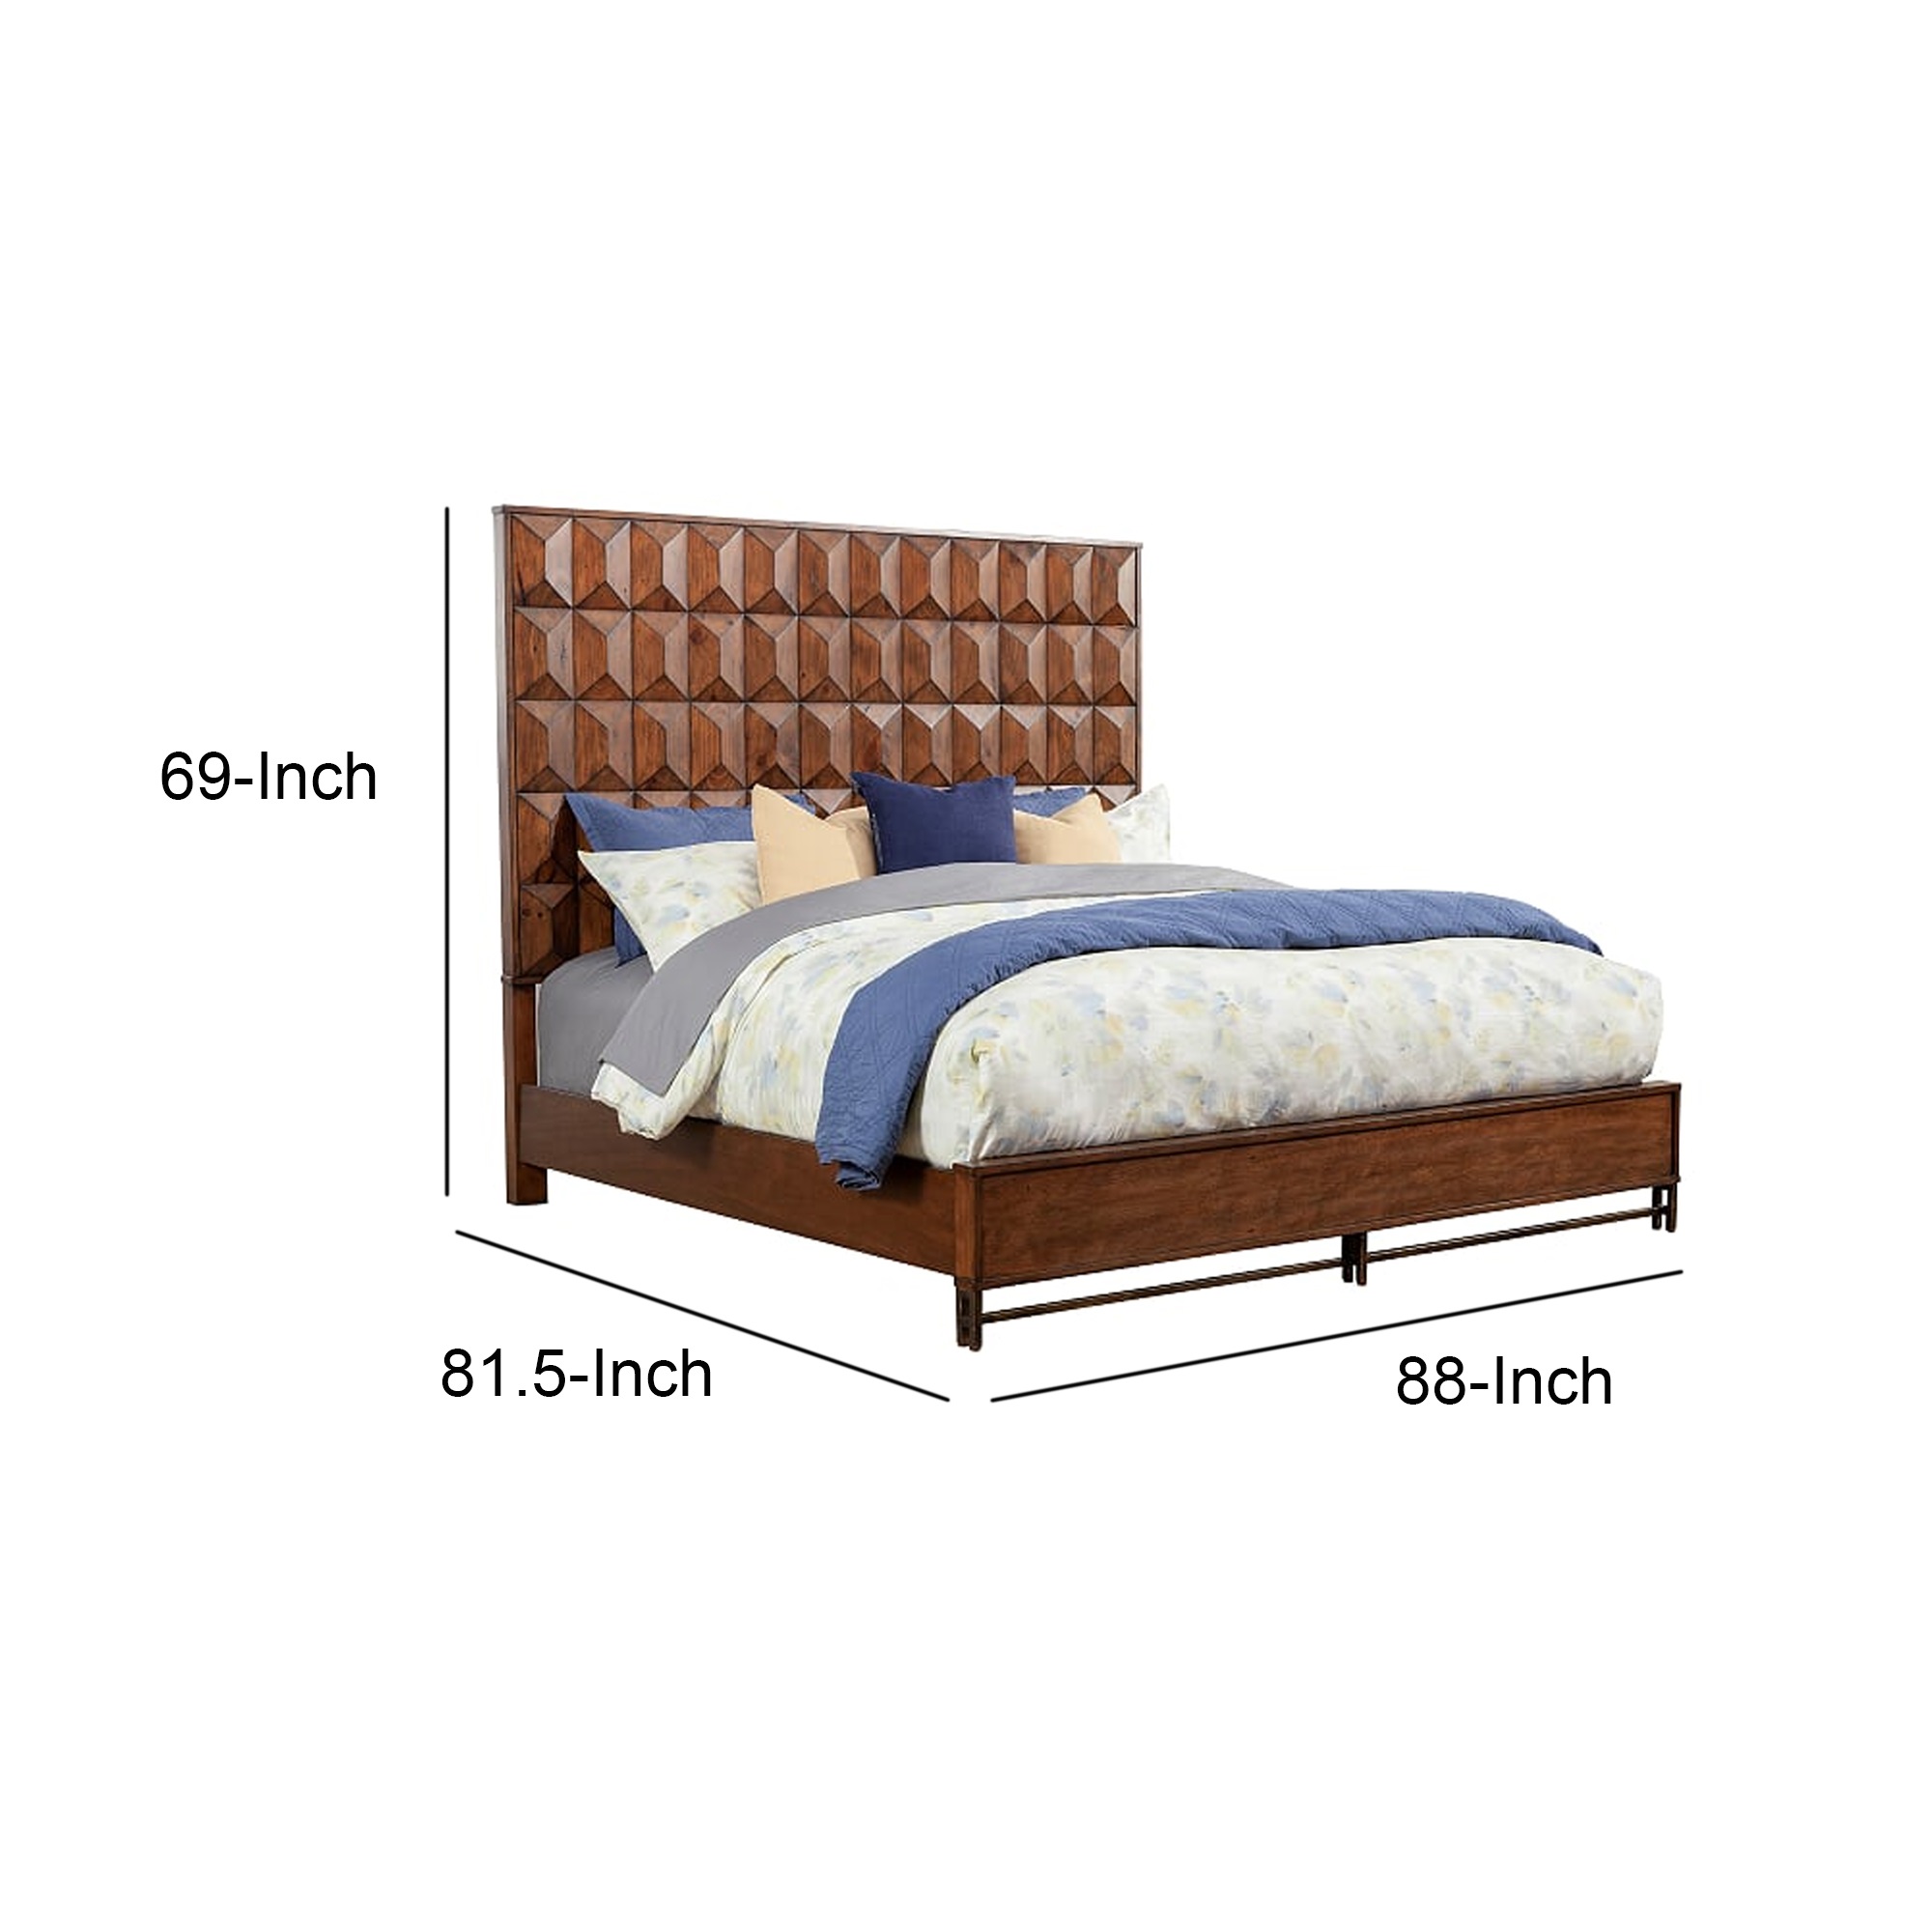 Benzara Wooden Standard King Bed with Honeycomb Design High Headboard, Brown